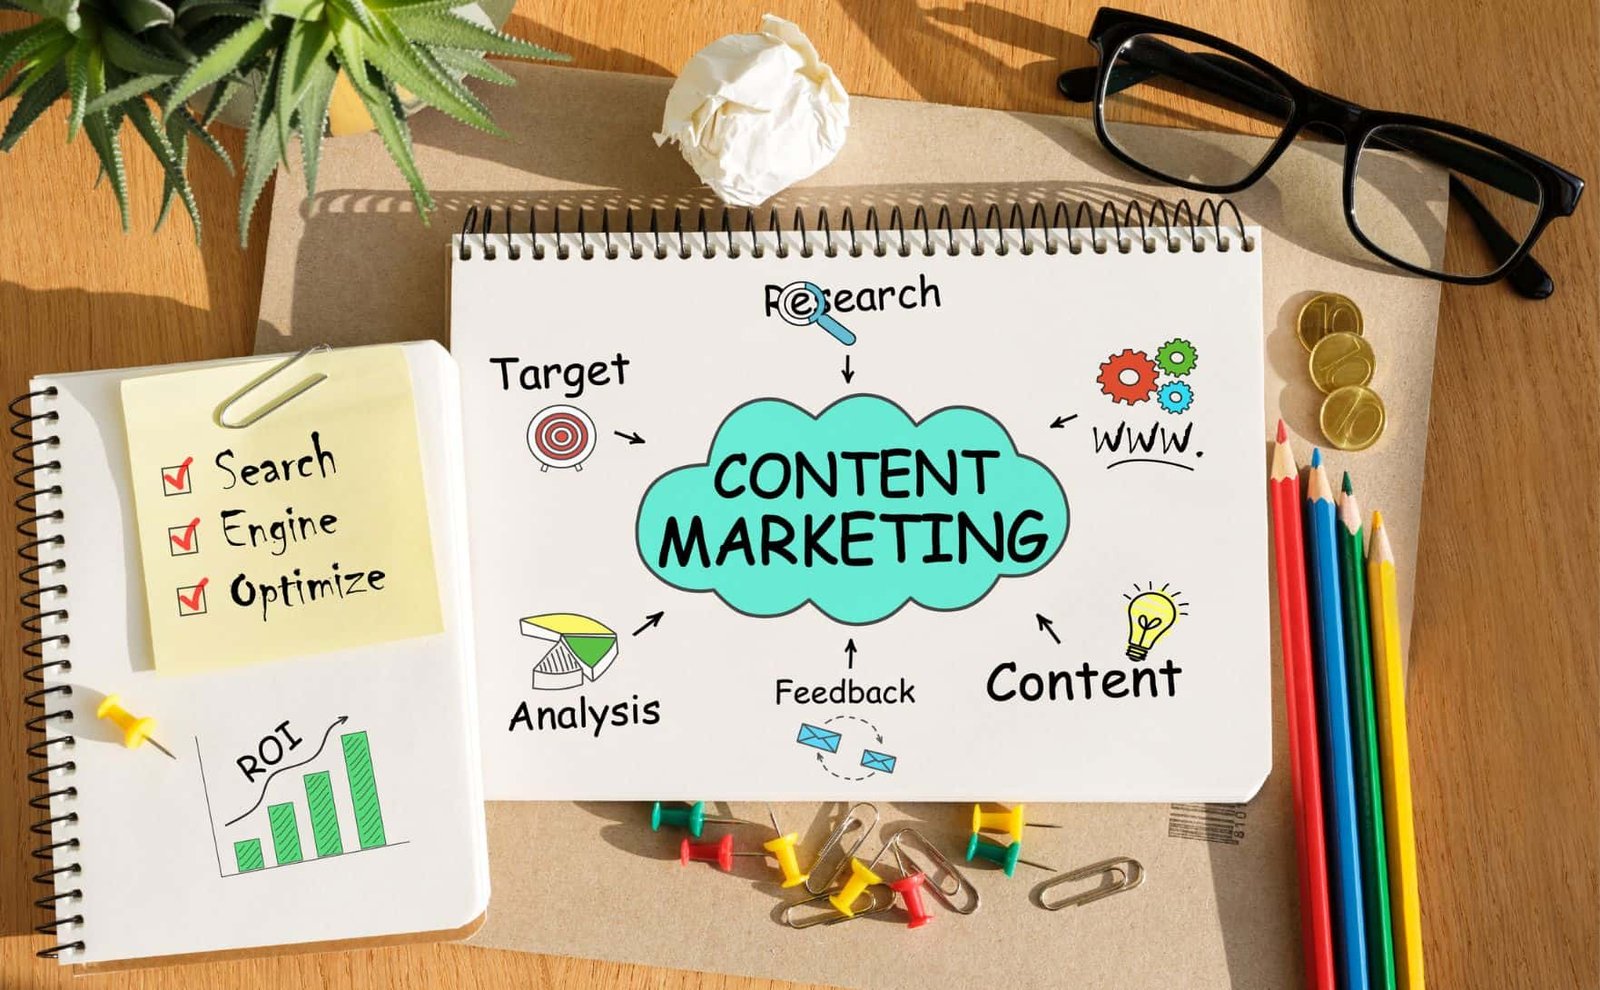  Content Marketing